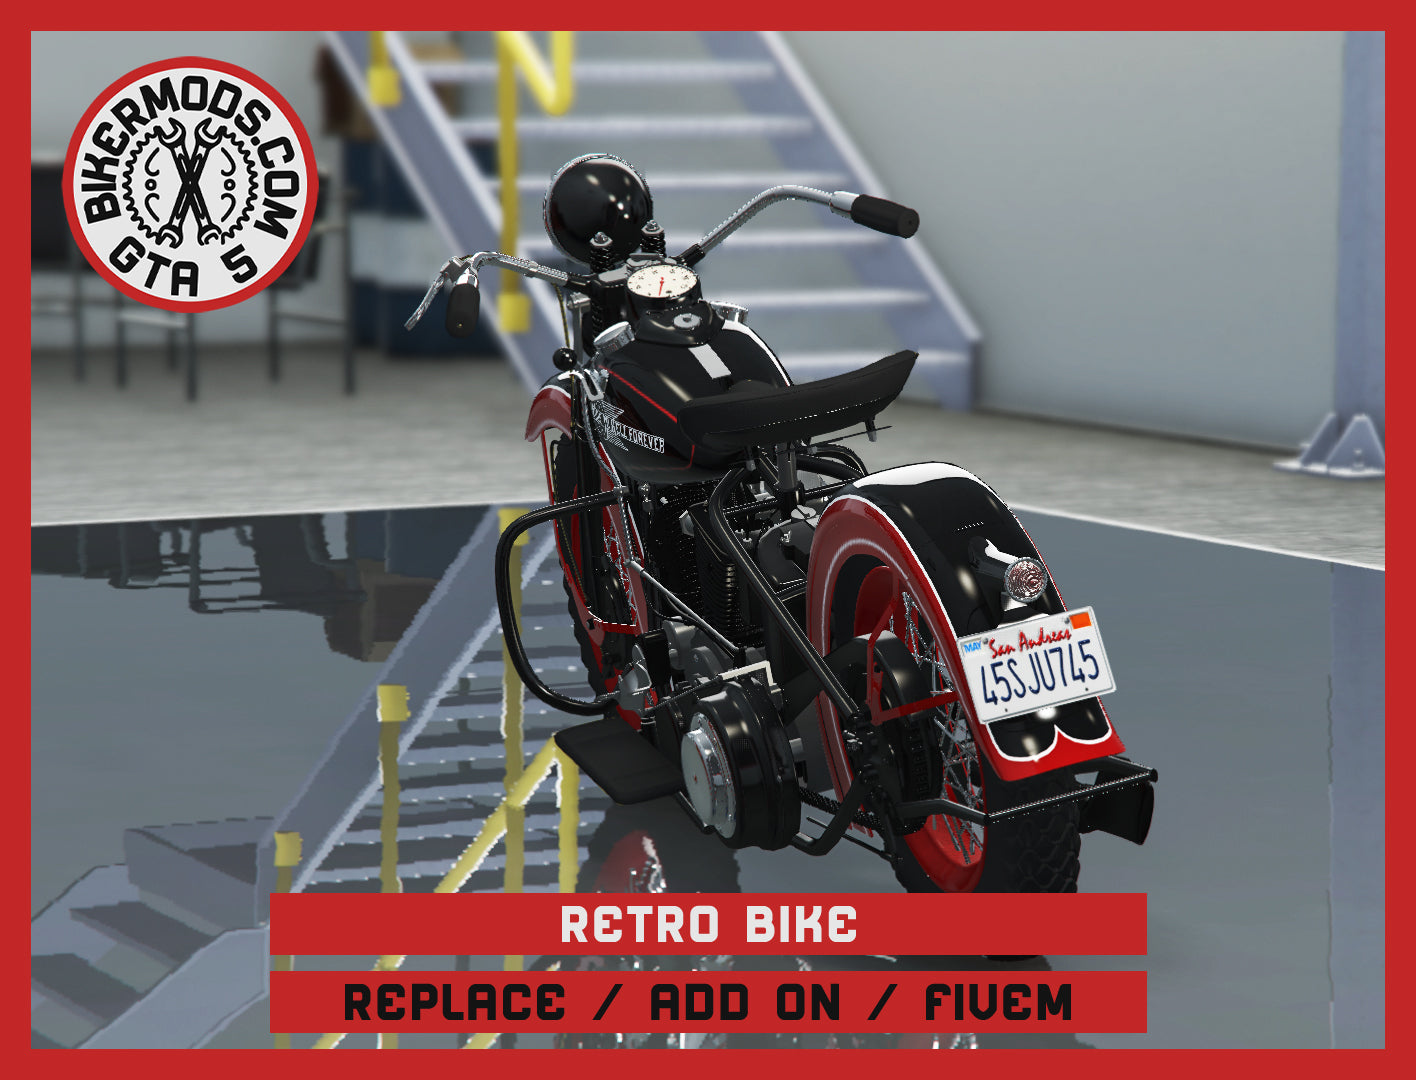 Retro Bike (Replace / Add On / FiveM) 286k Poly